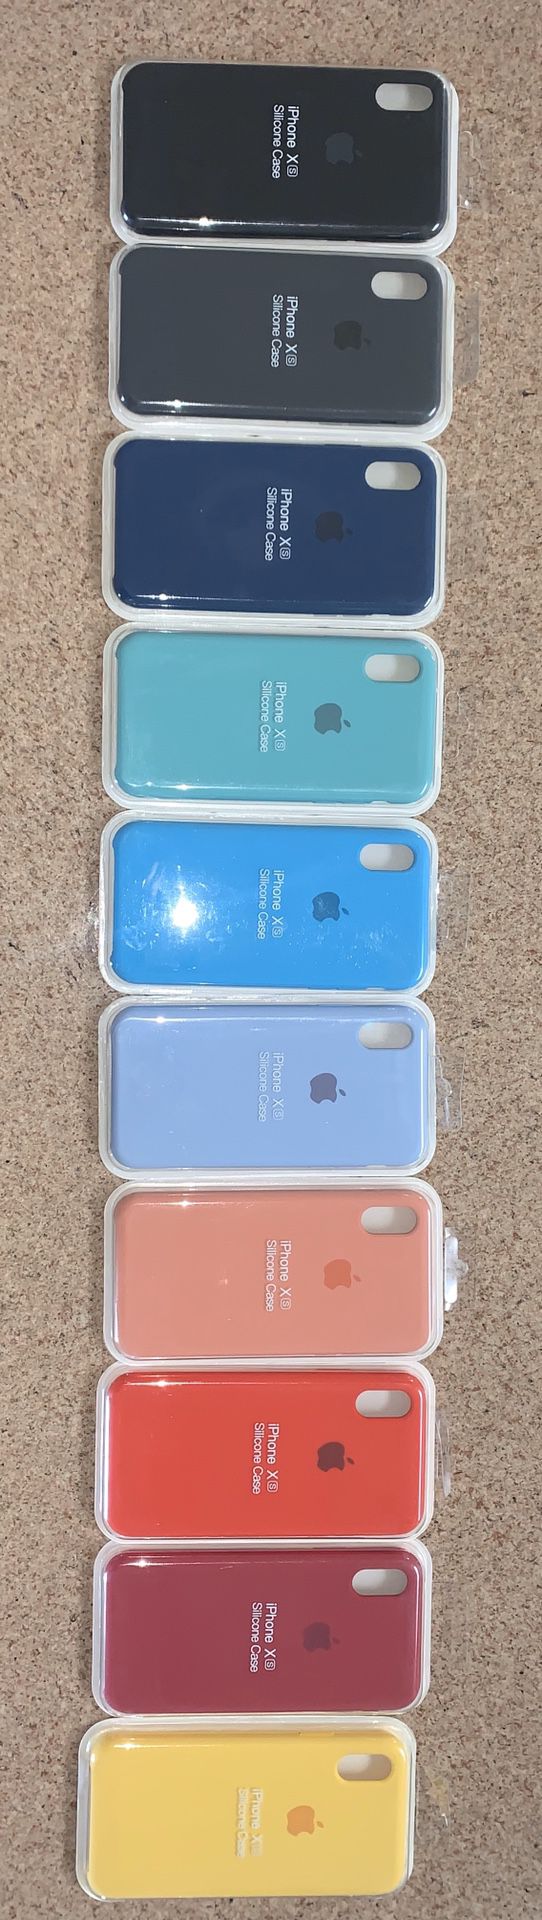 Iphone Silicone Cases